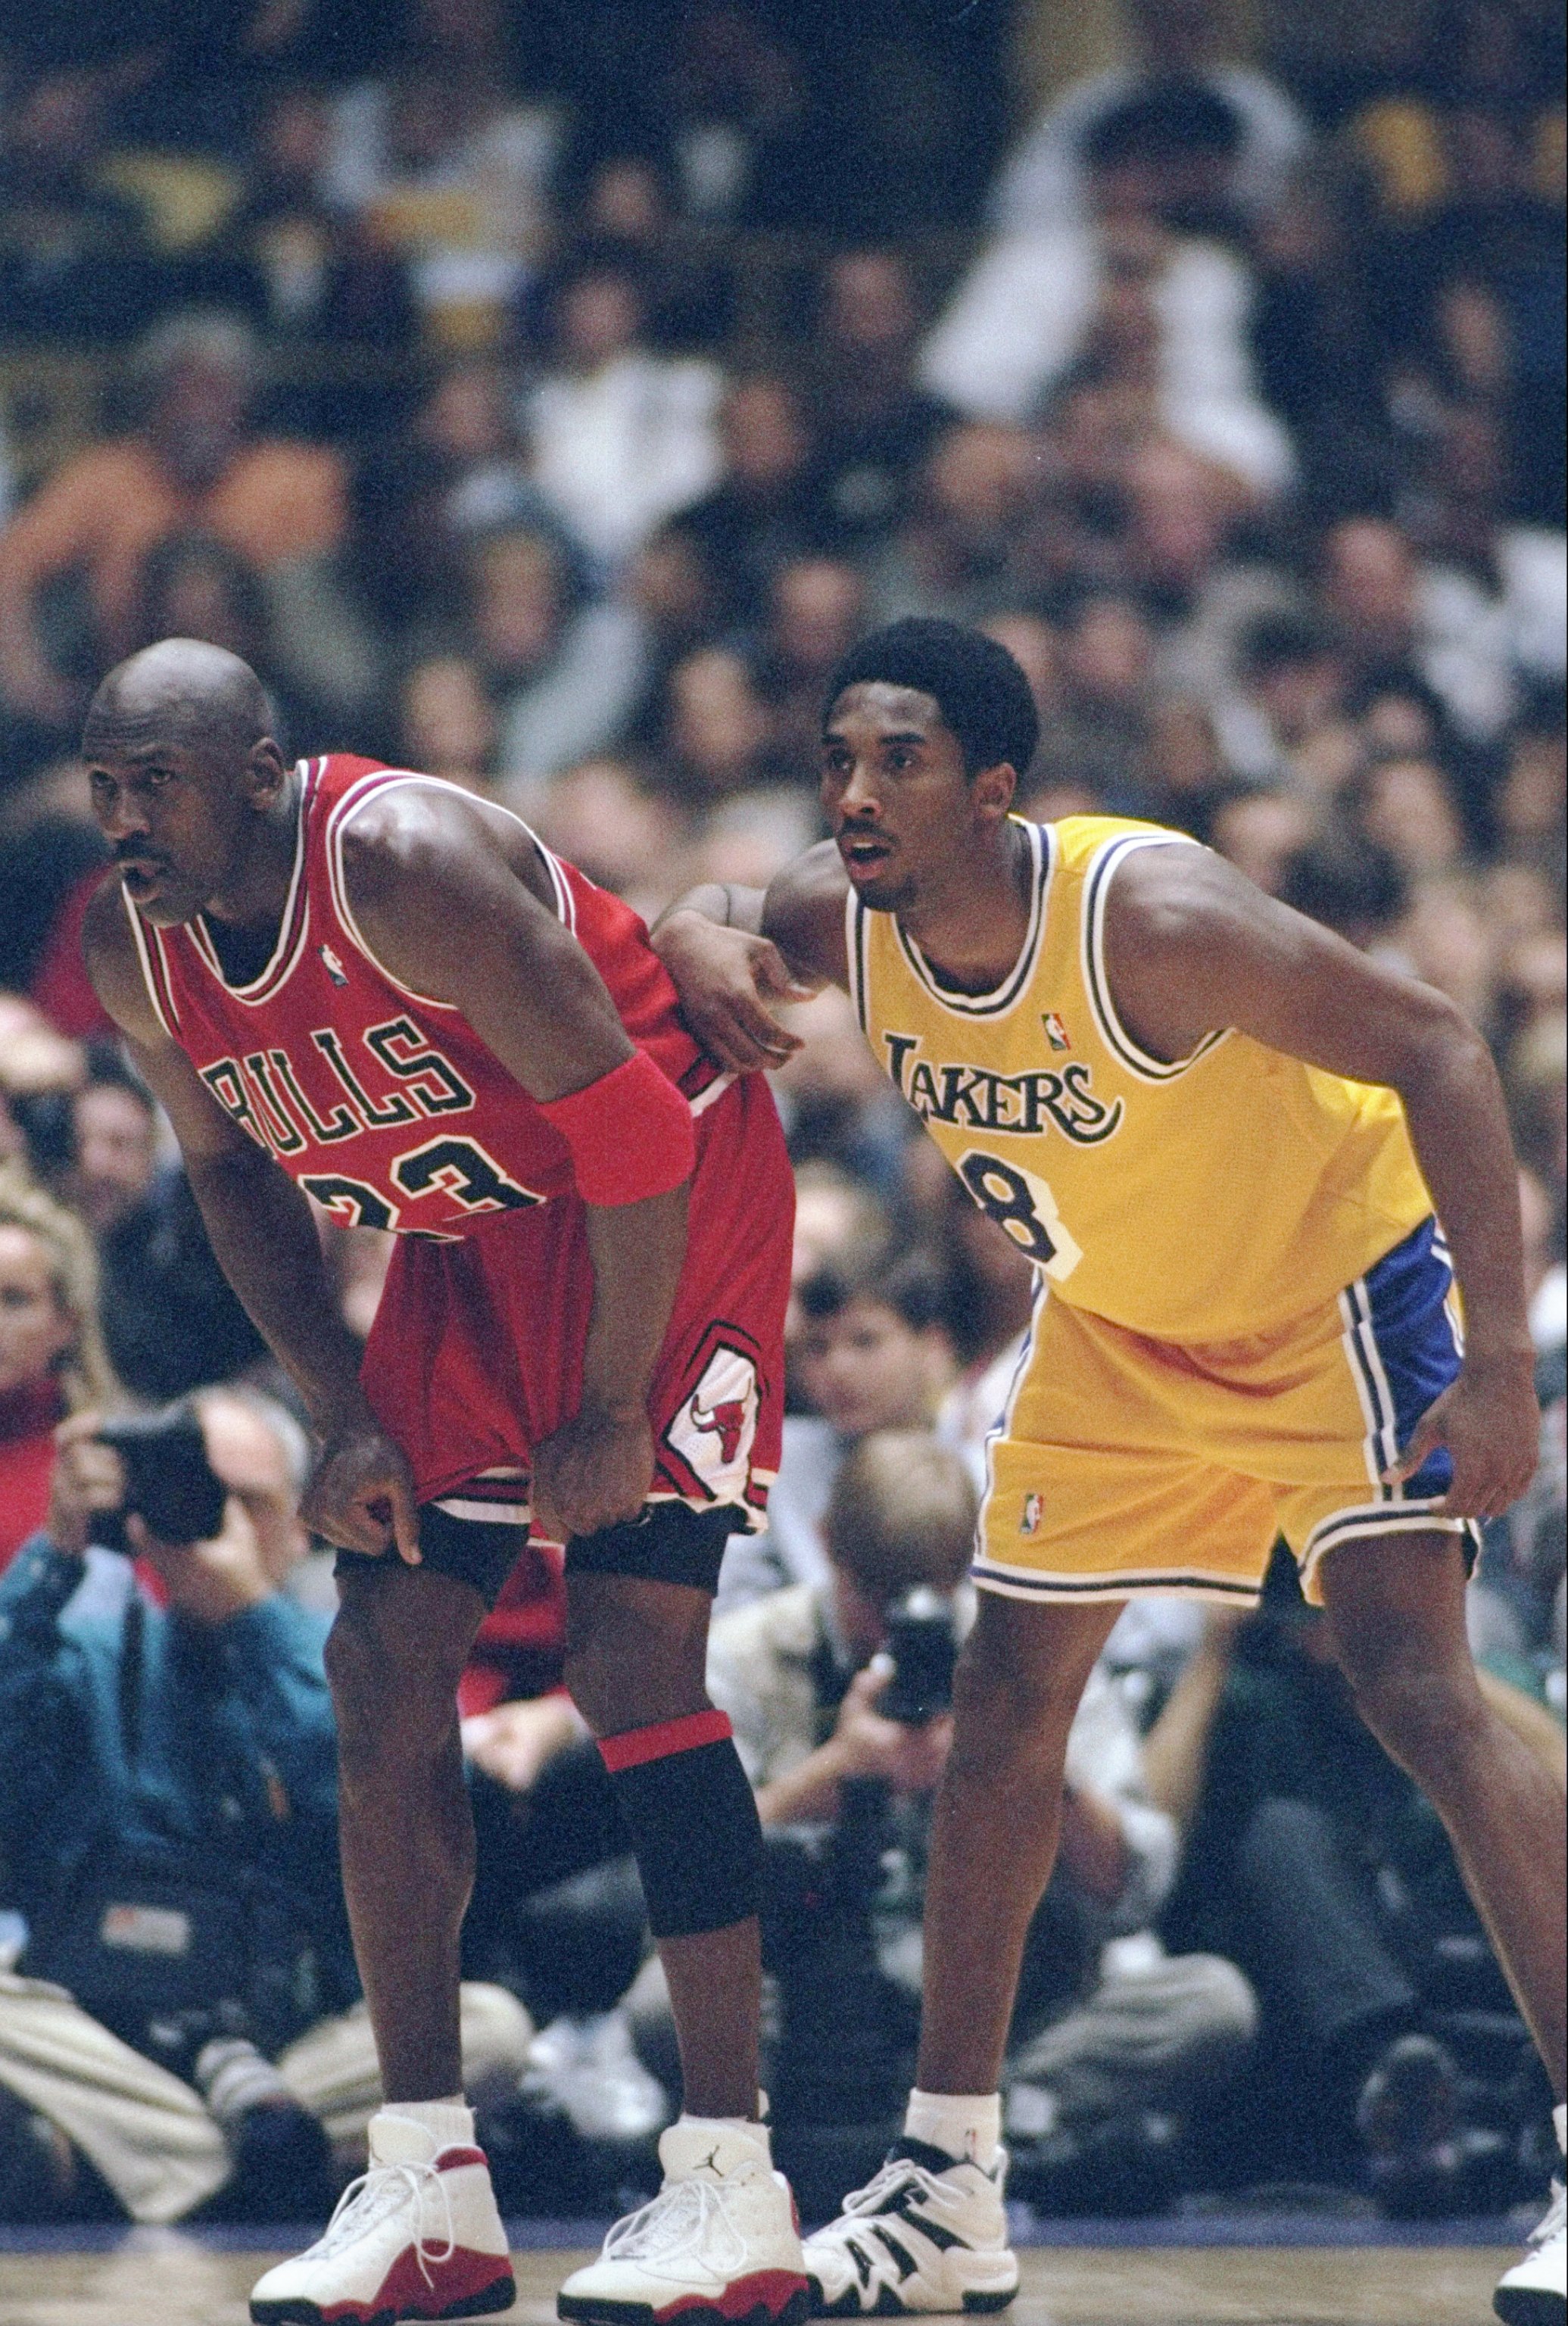 Michael Jordan Vs Kobe Bryant T-shirt